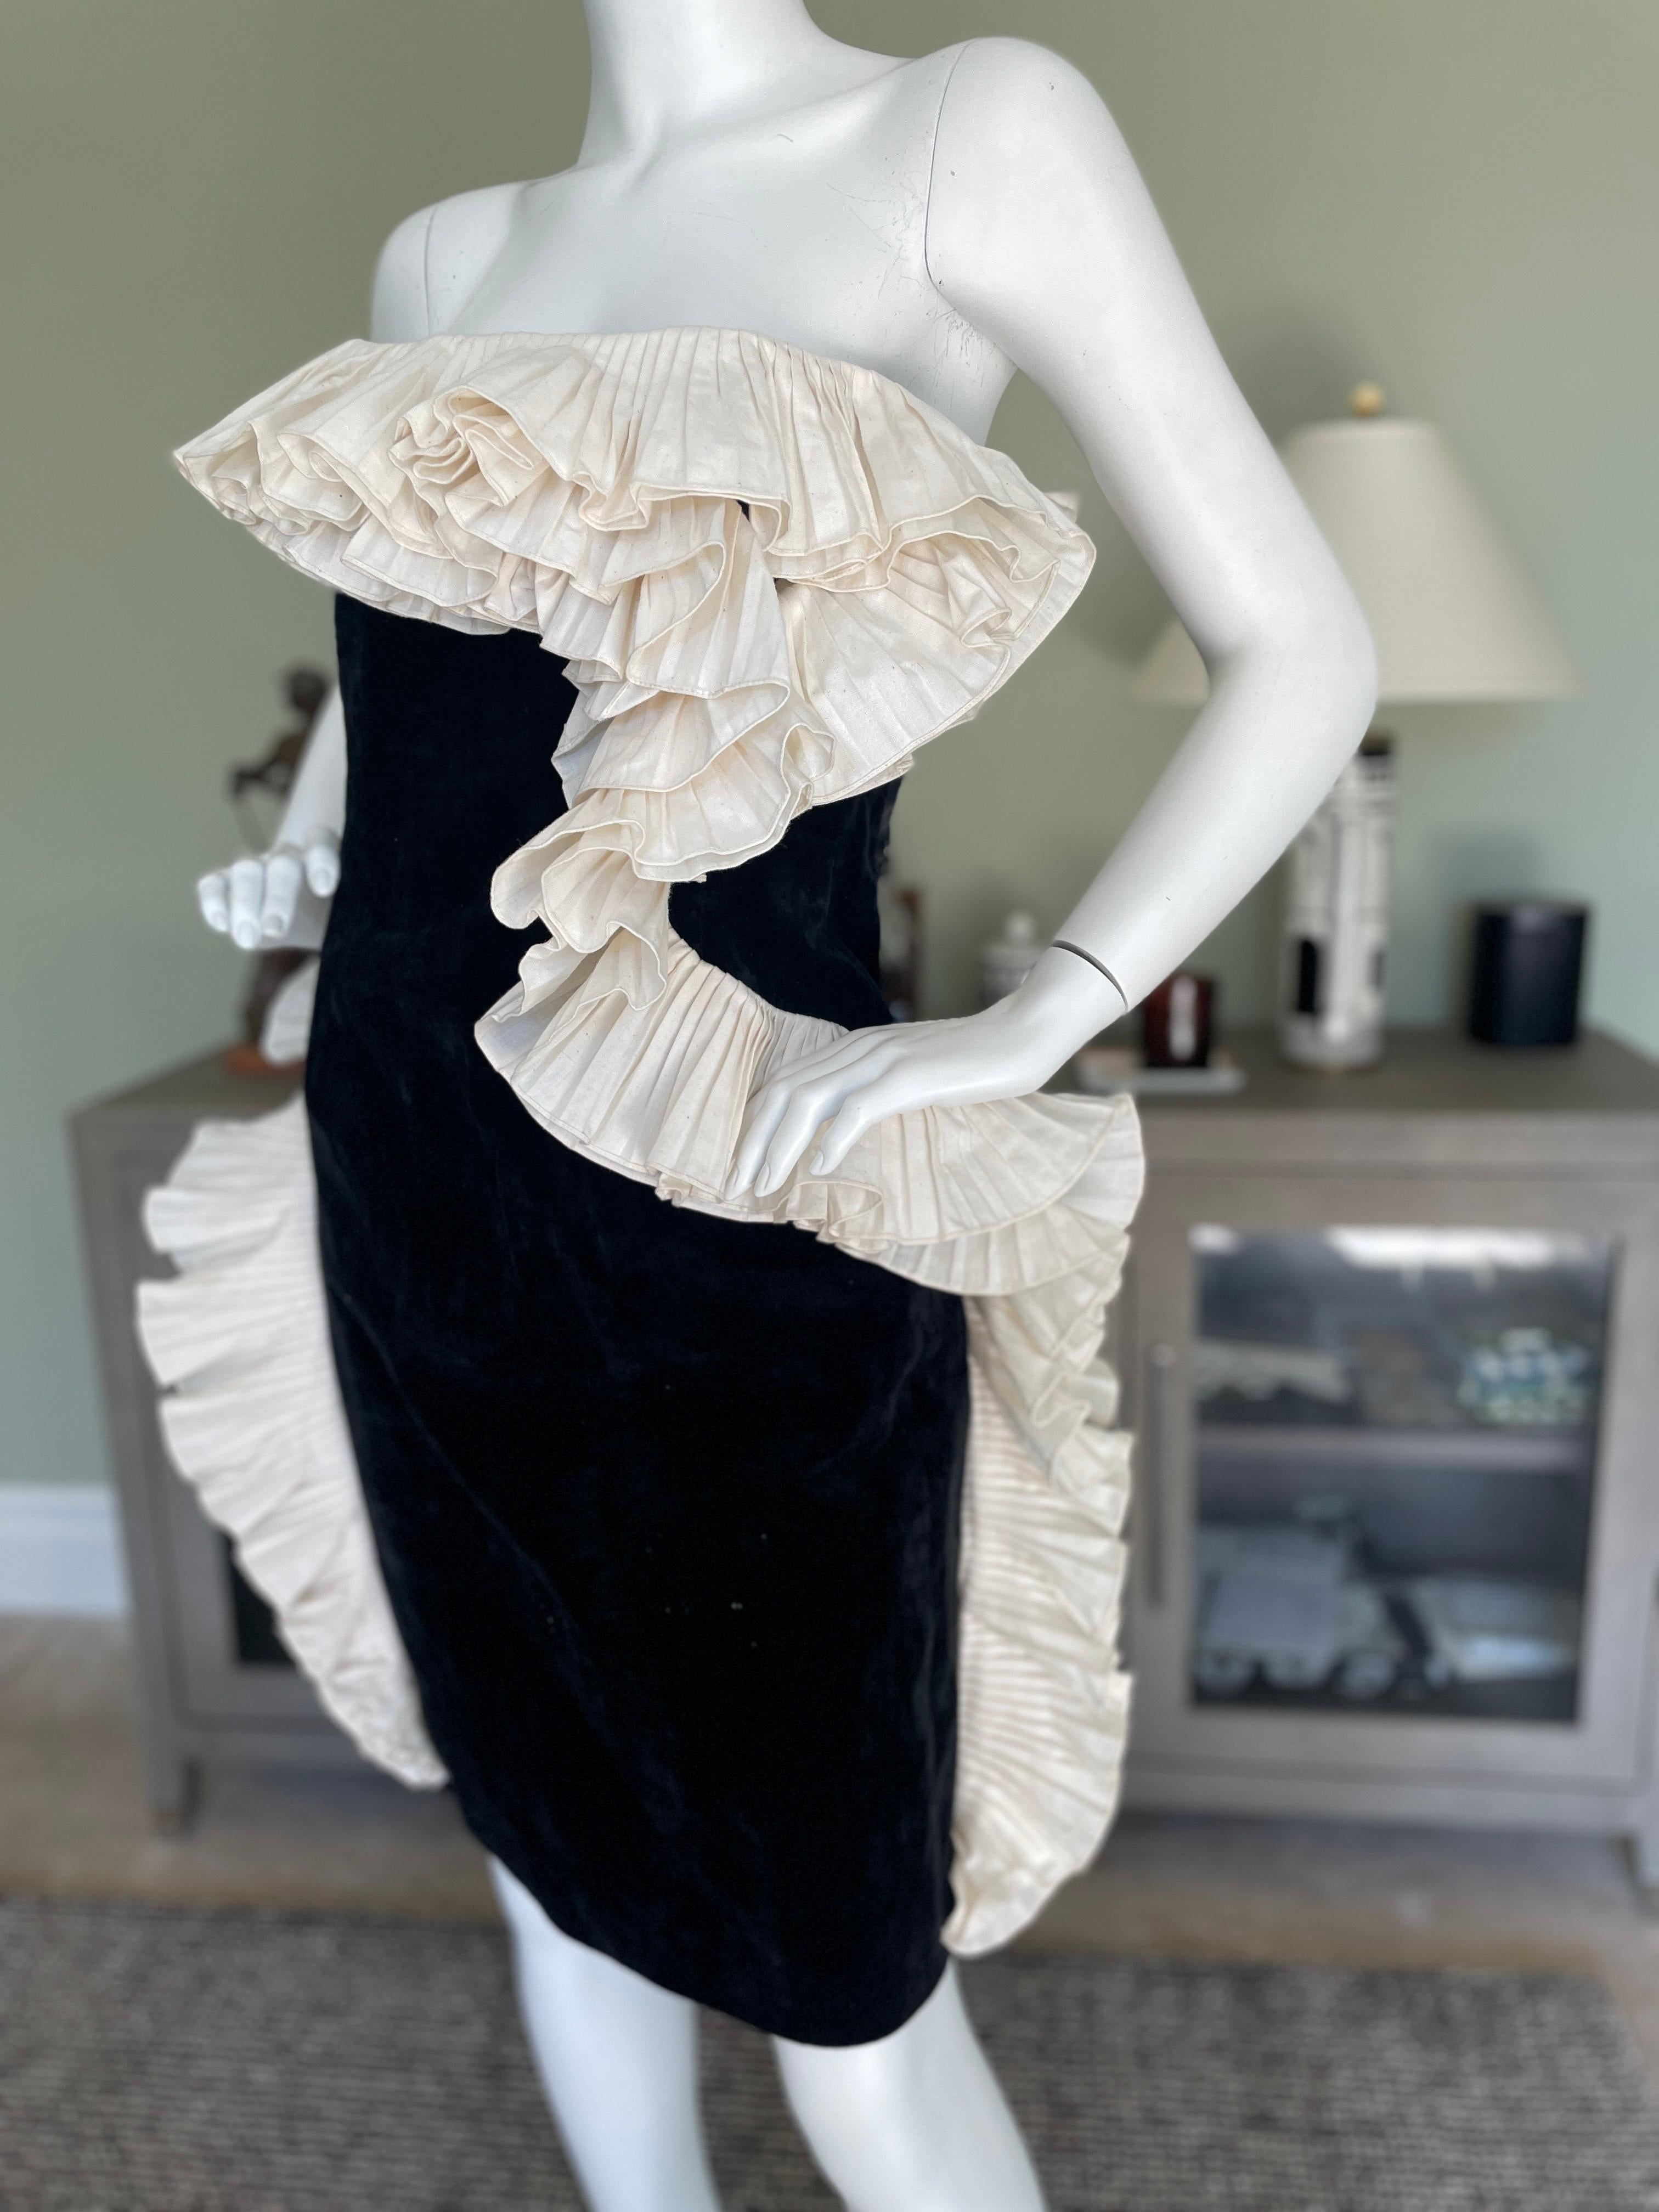 Lanvin by Alber Elbaz Black Velvet Dress w Dramatic White Ruffle from Fall 2012 For Sale 1